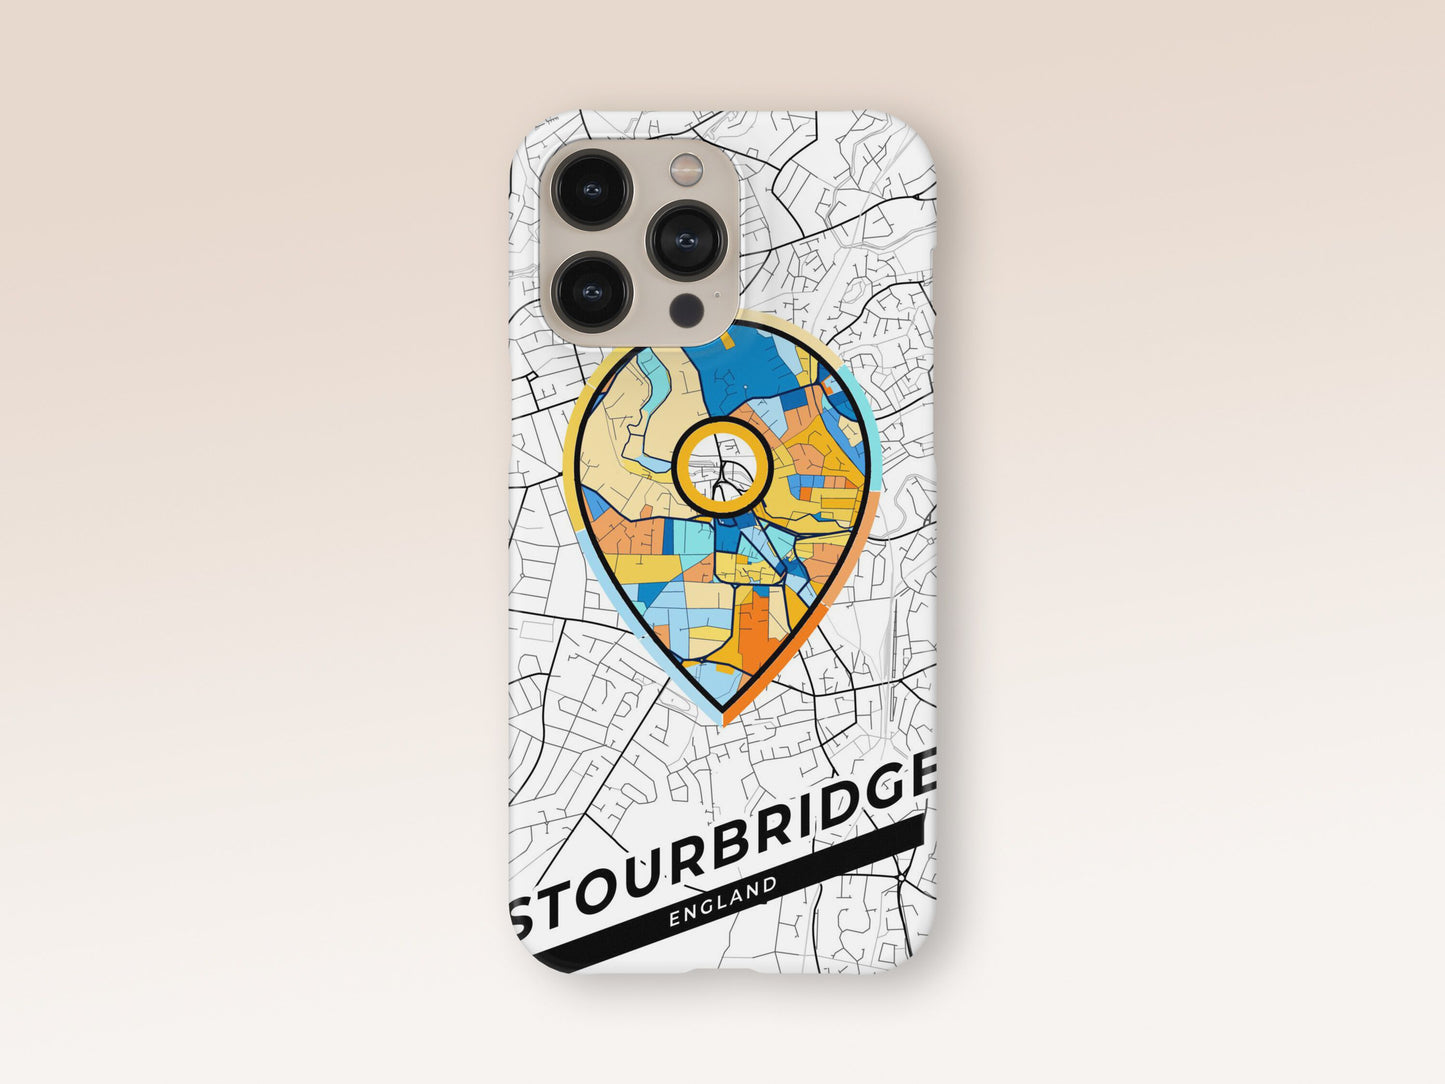 Stourbridge England slim phone case with colorful icon 1